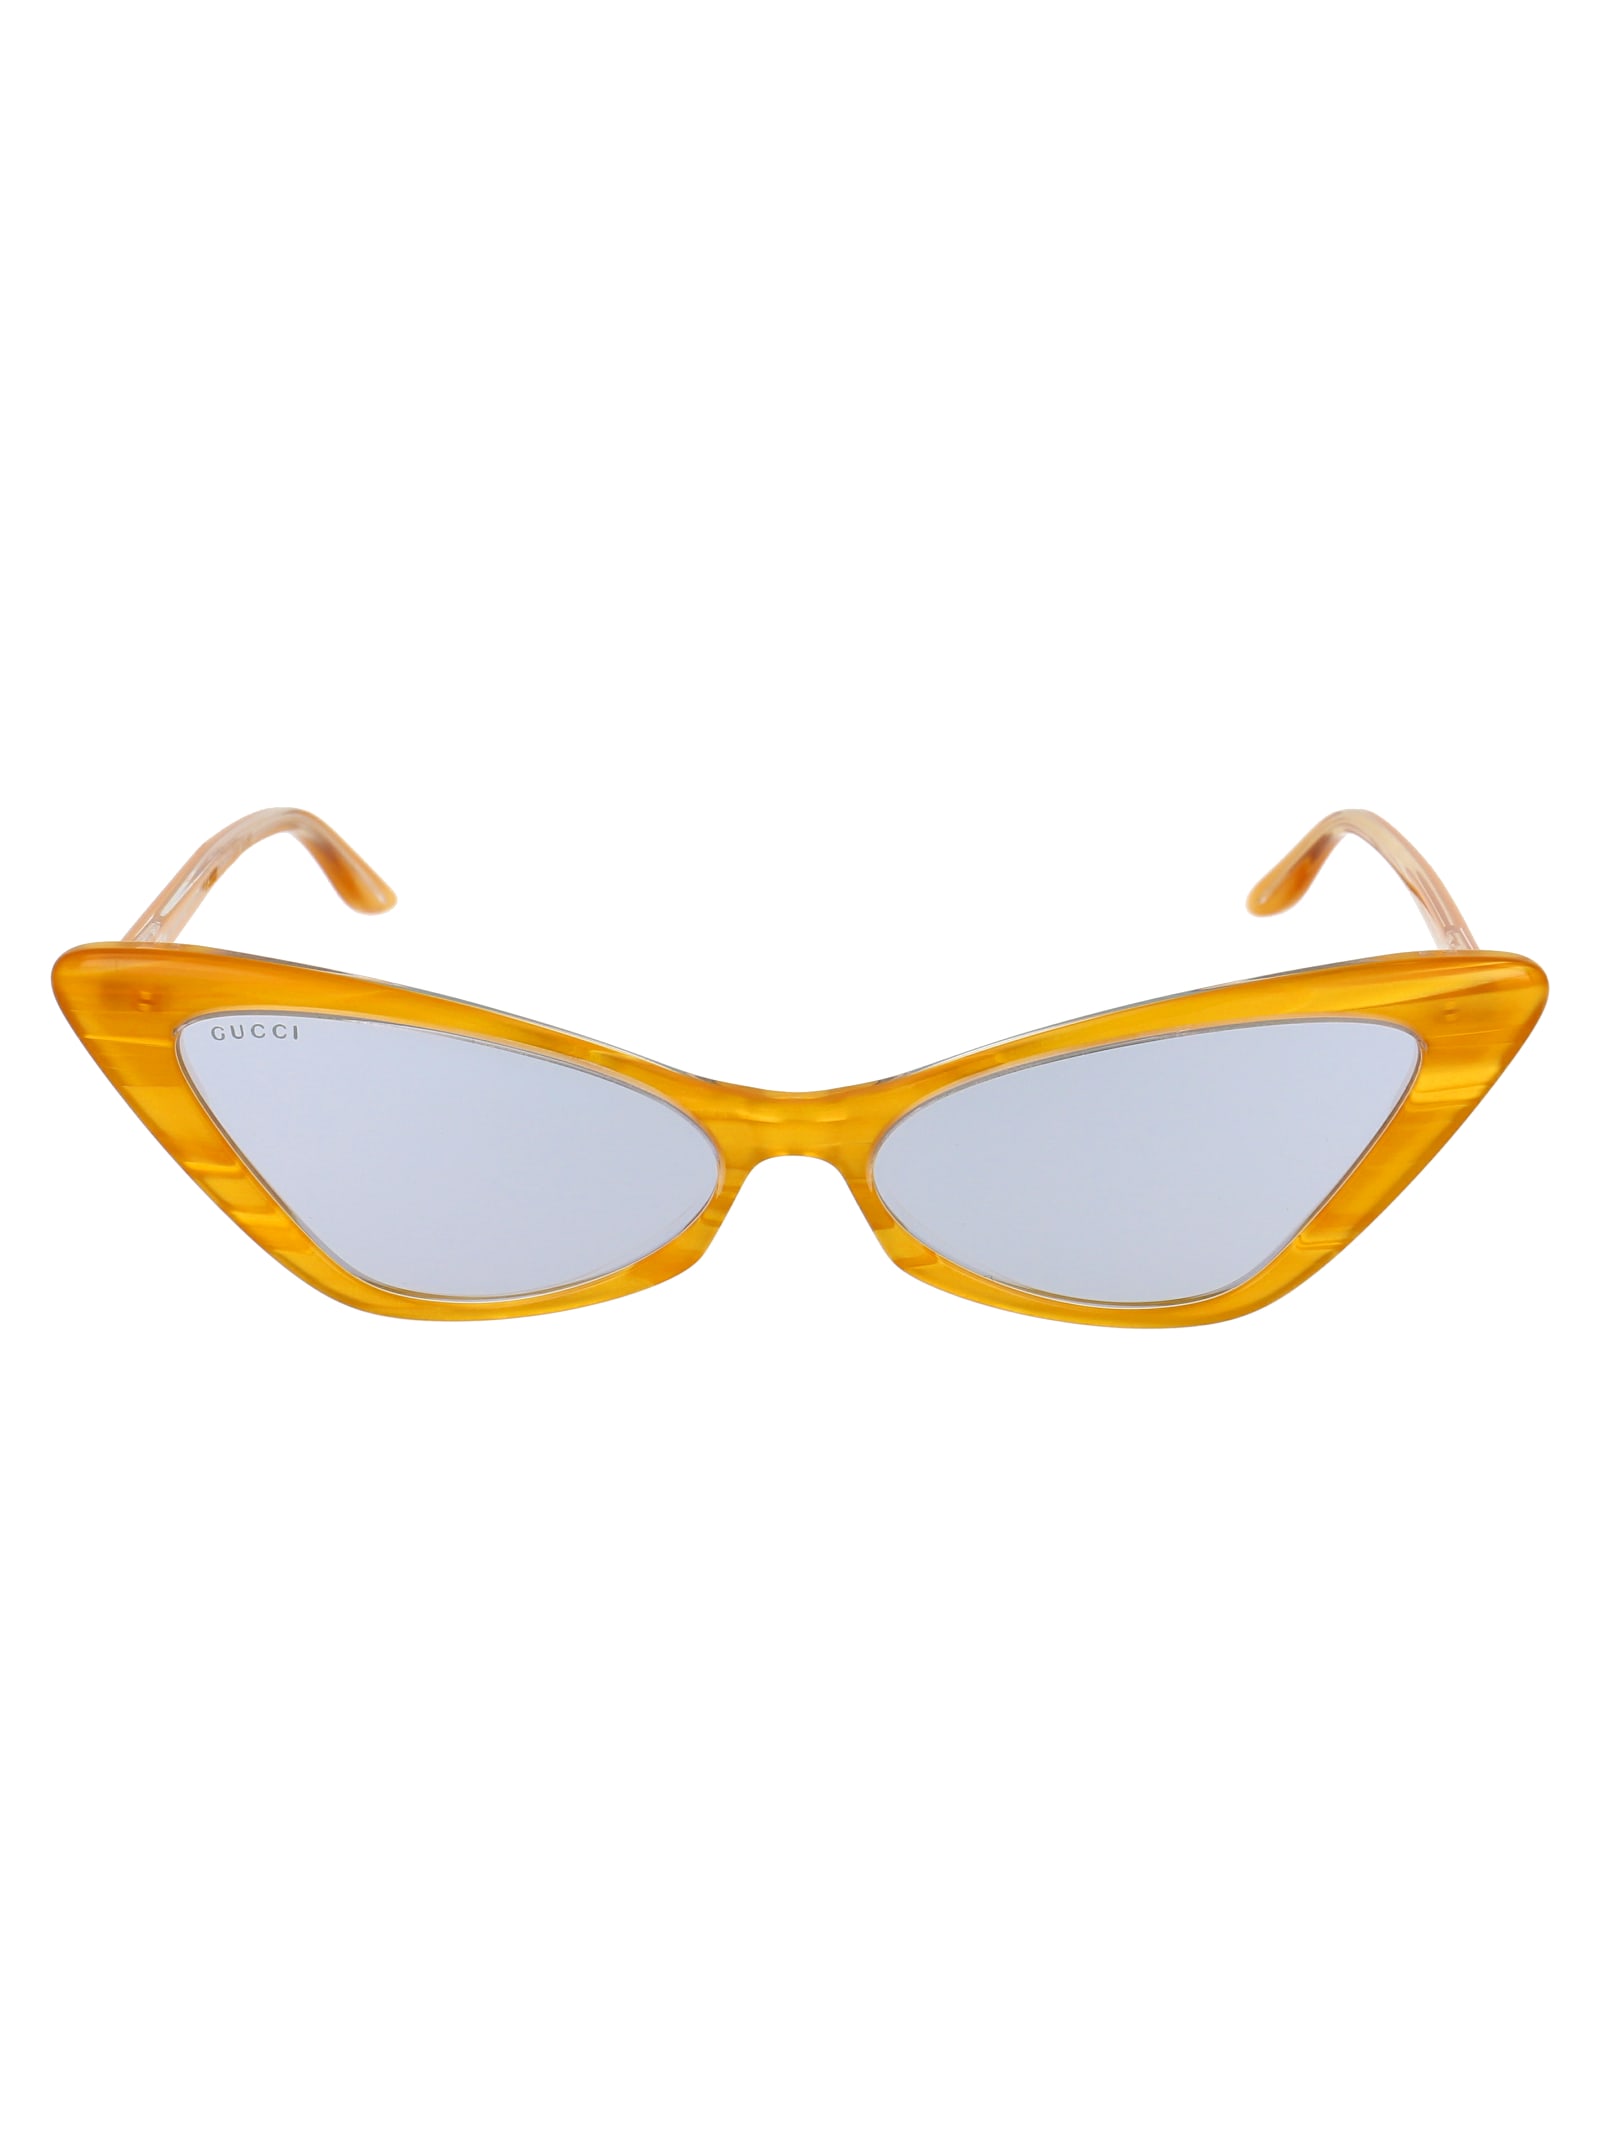 Gucci Sunglasses In Yellow Yellow Silver